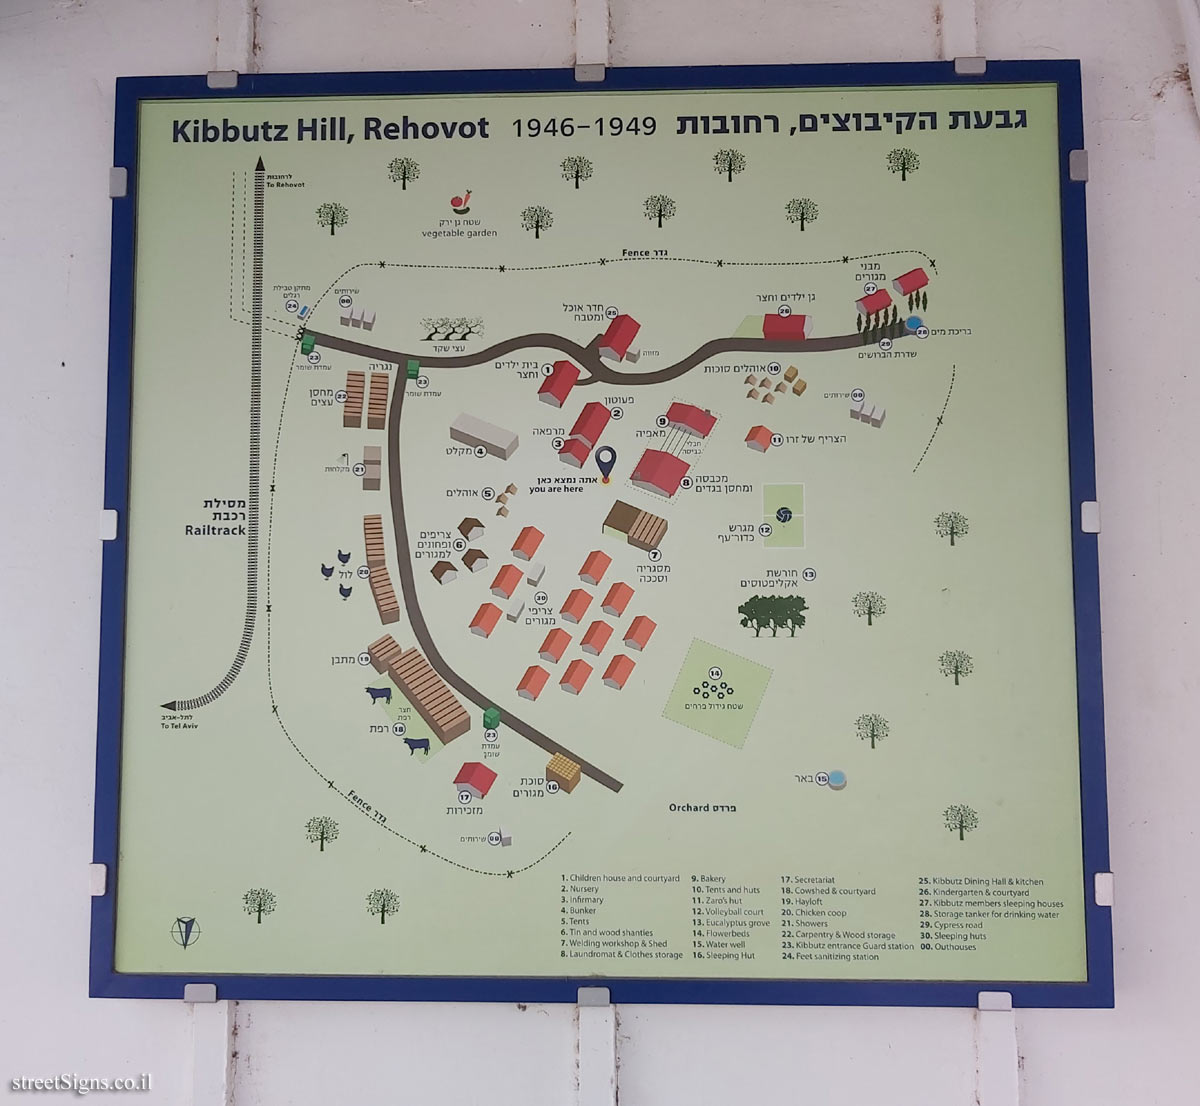 Rehovot - Ayalon Institute - Map of Kibbutz Hill